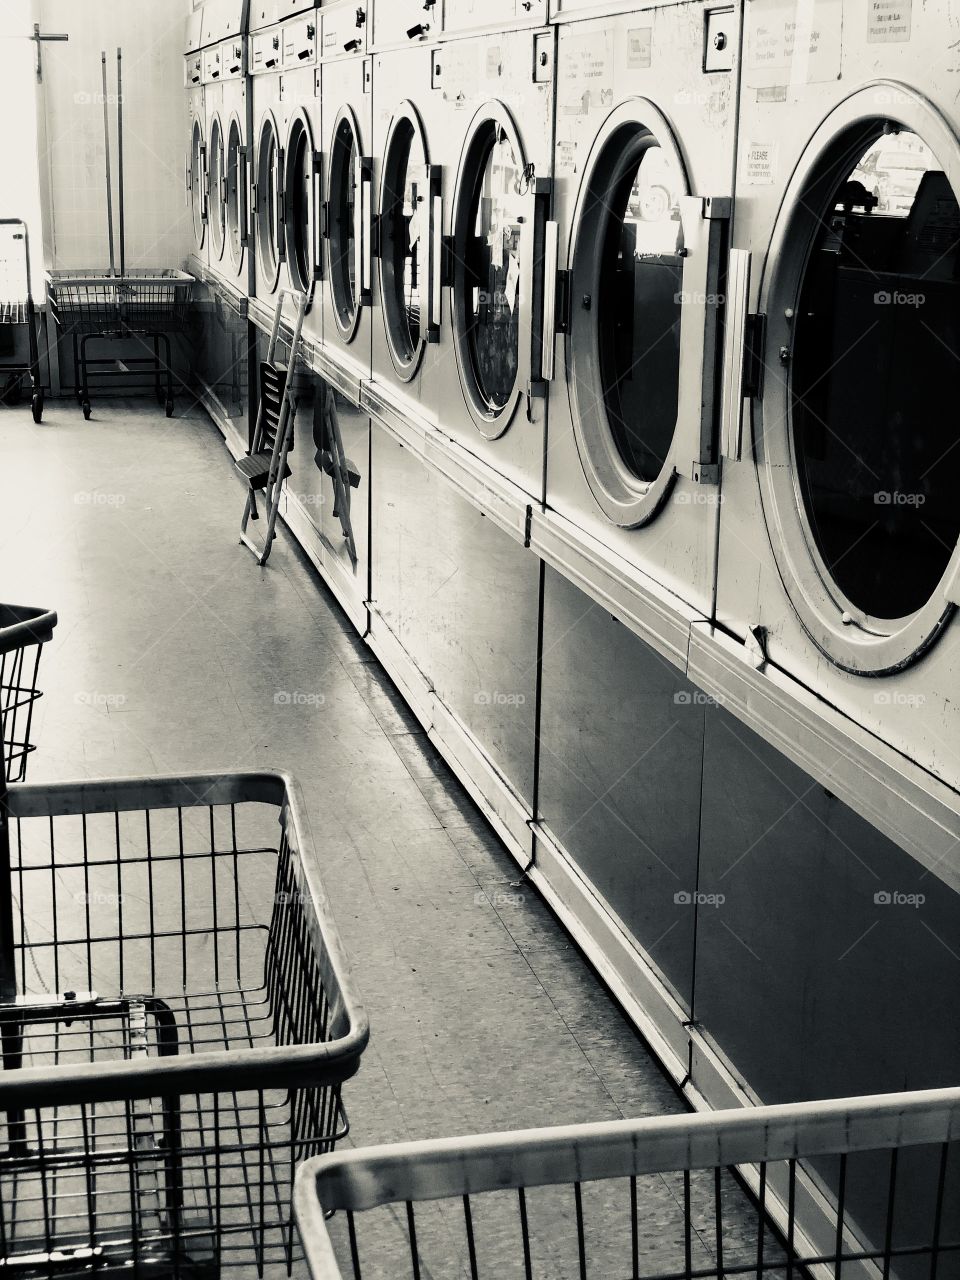 Laundromat dryers solitude 